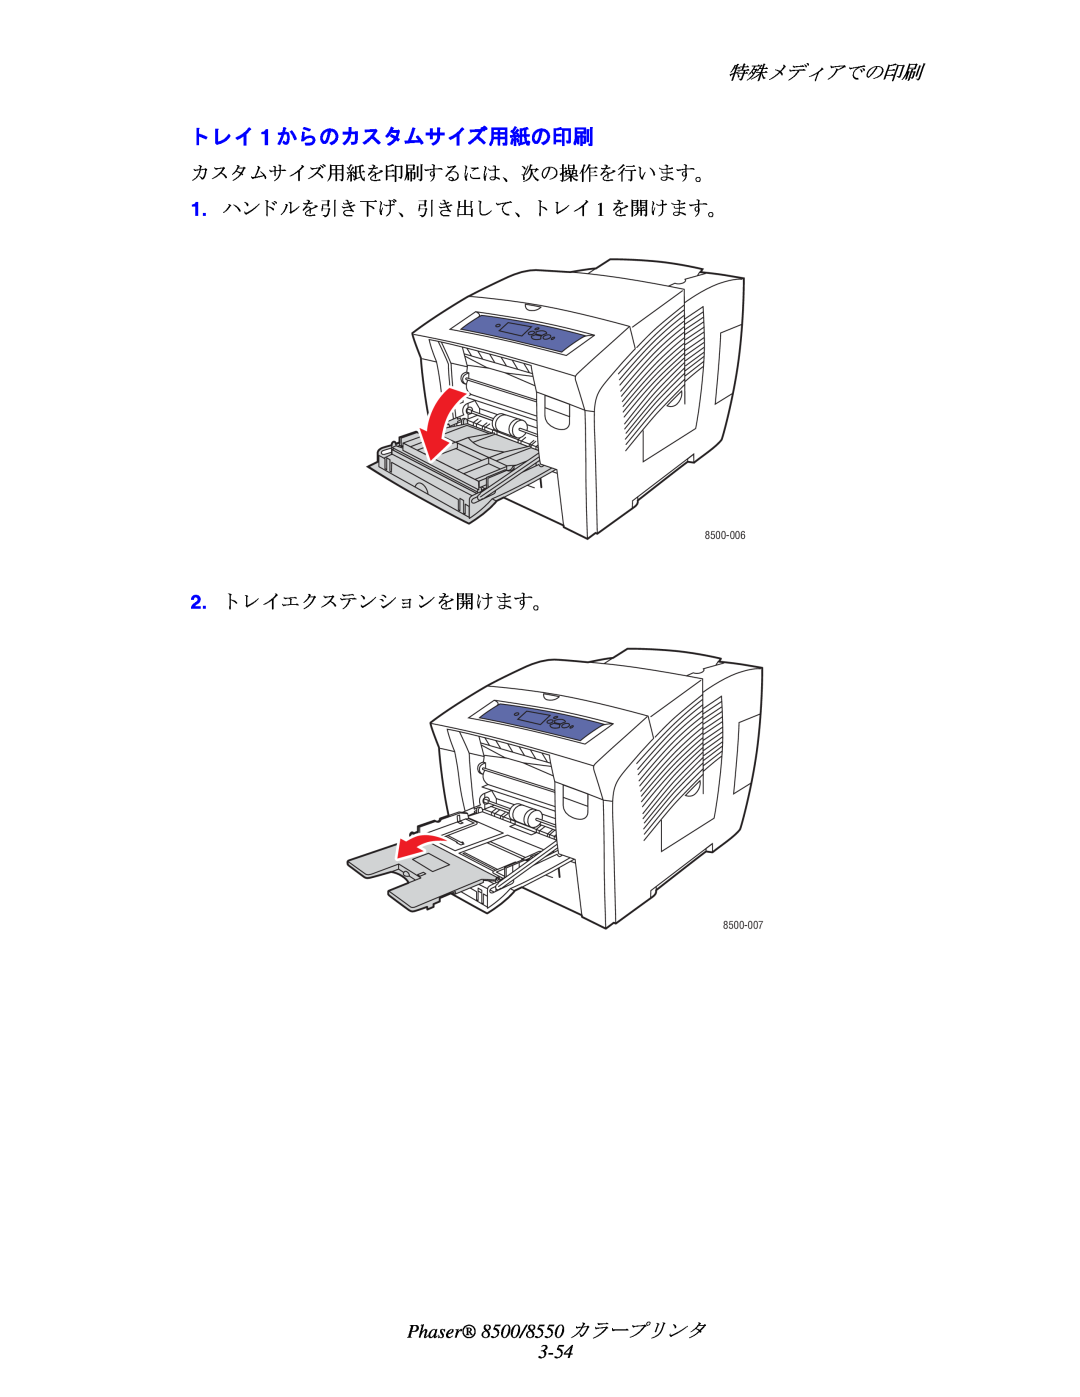 Xerox manual ト レイ 1 からのカスタムサイズ用紙の印刷, 特殊メデ ィ アでの印刷, Phaser 8500/8550 カ ラープ リ ン タ 3-54, 8500-006, 8500-007 